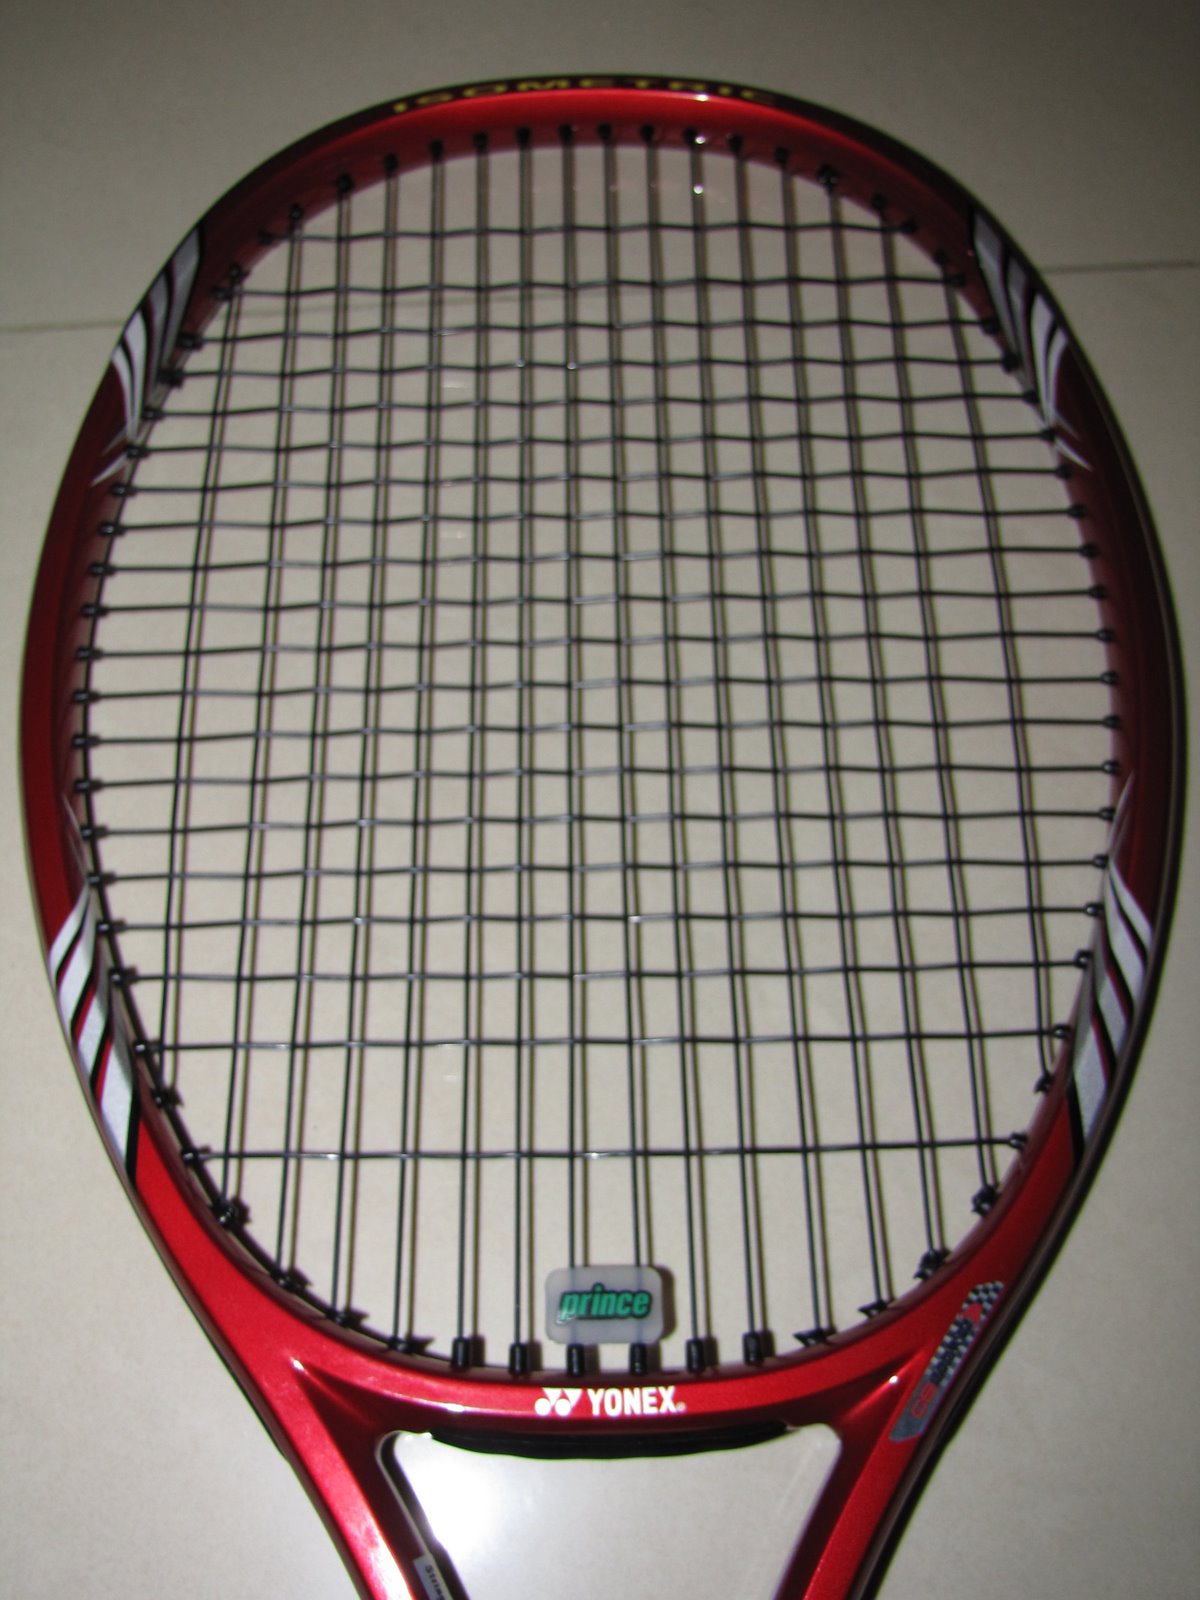 Our Tennis Racket: Yonex RDiS 100 mid